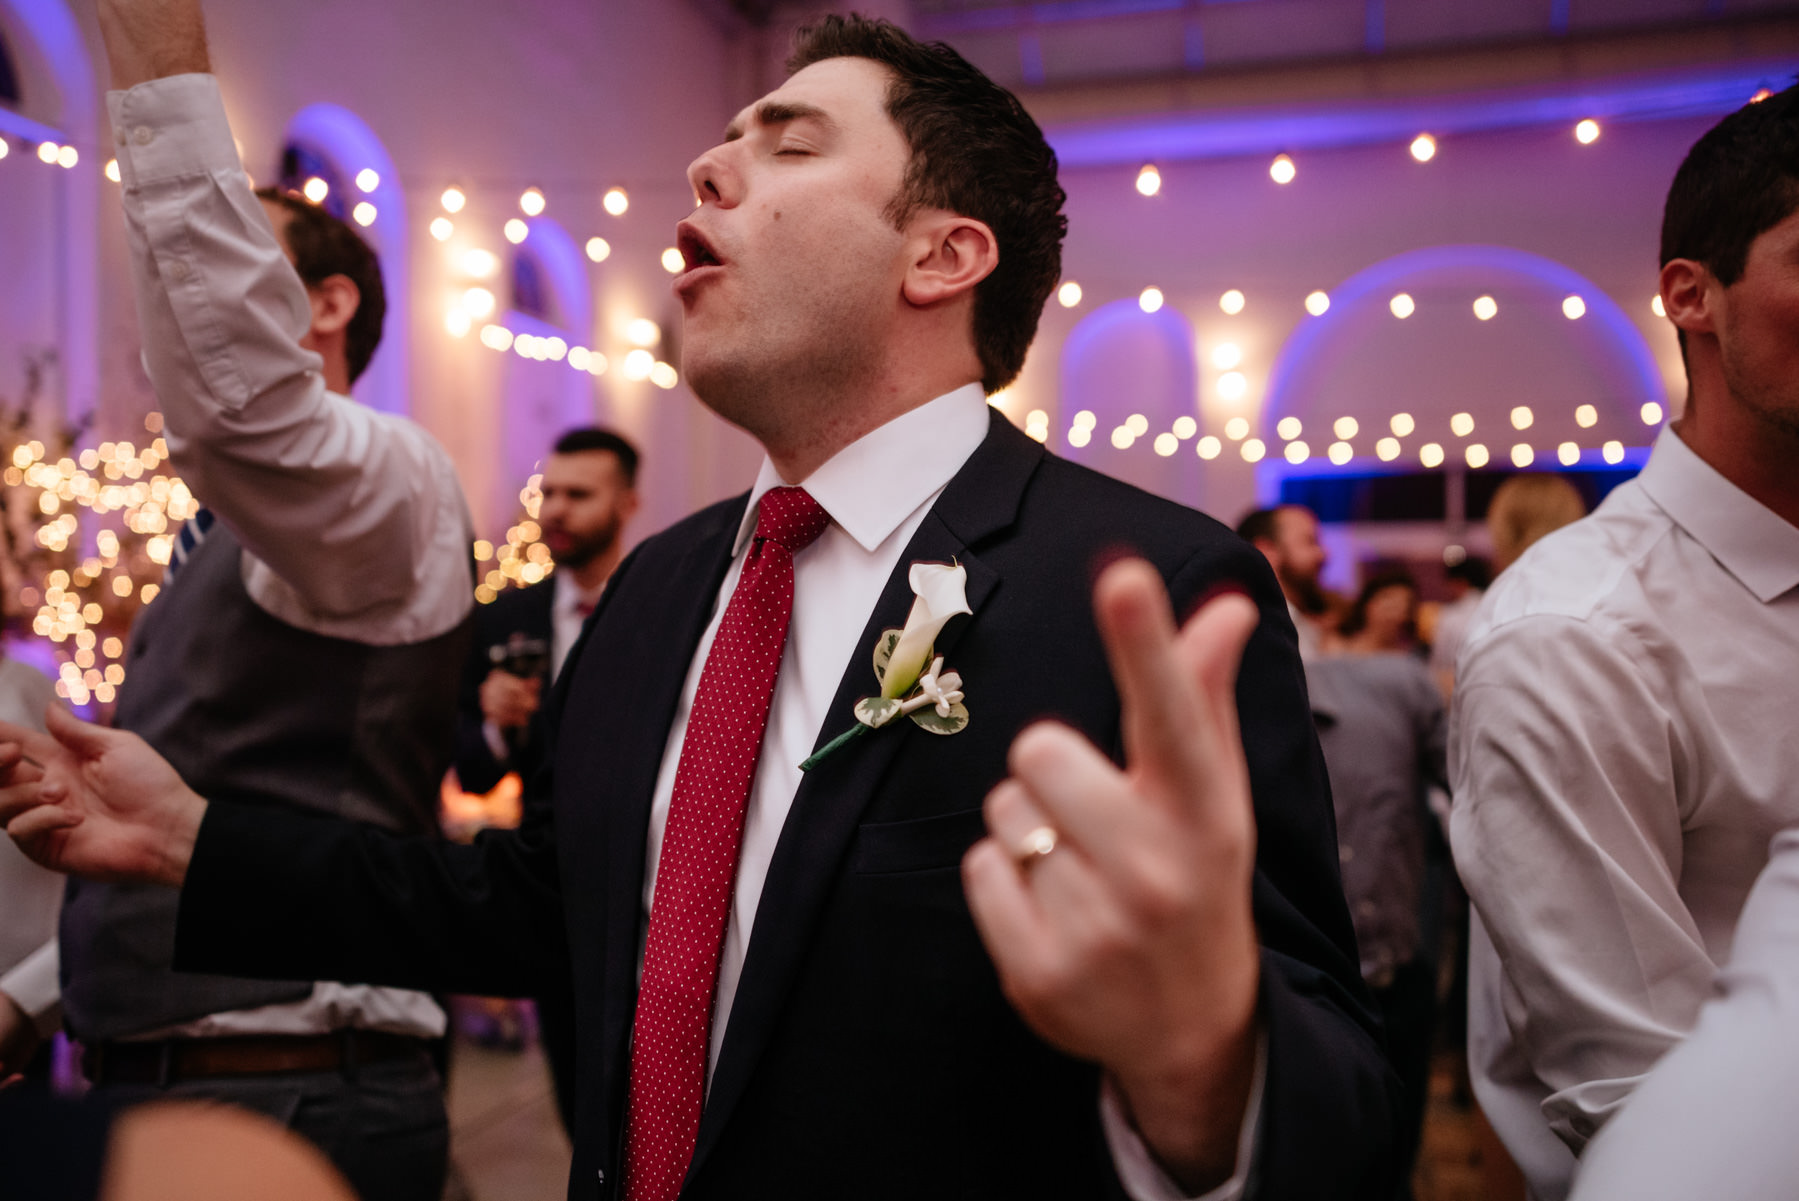 groom singing during wedding reception